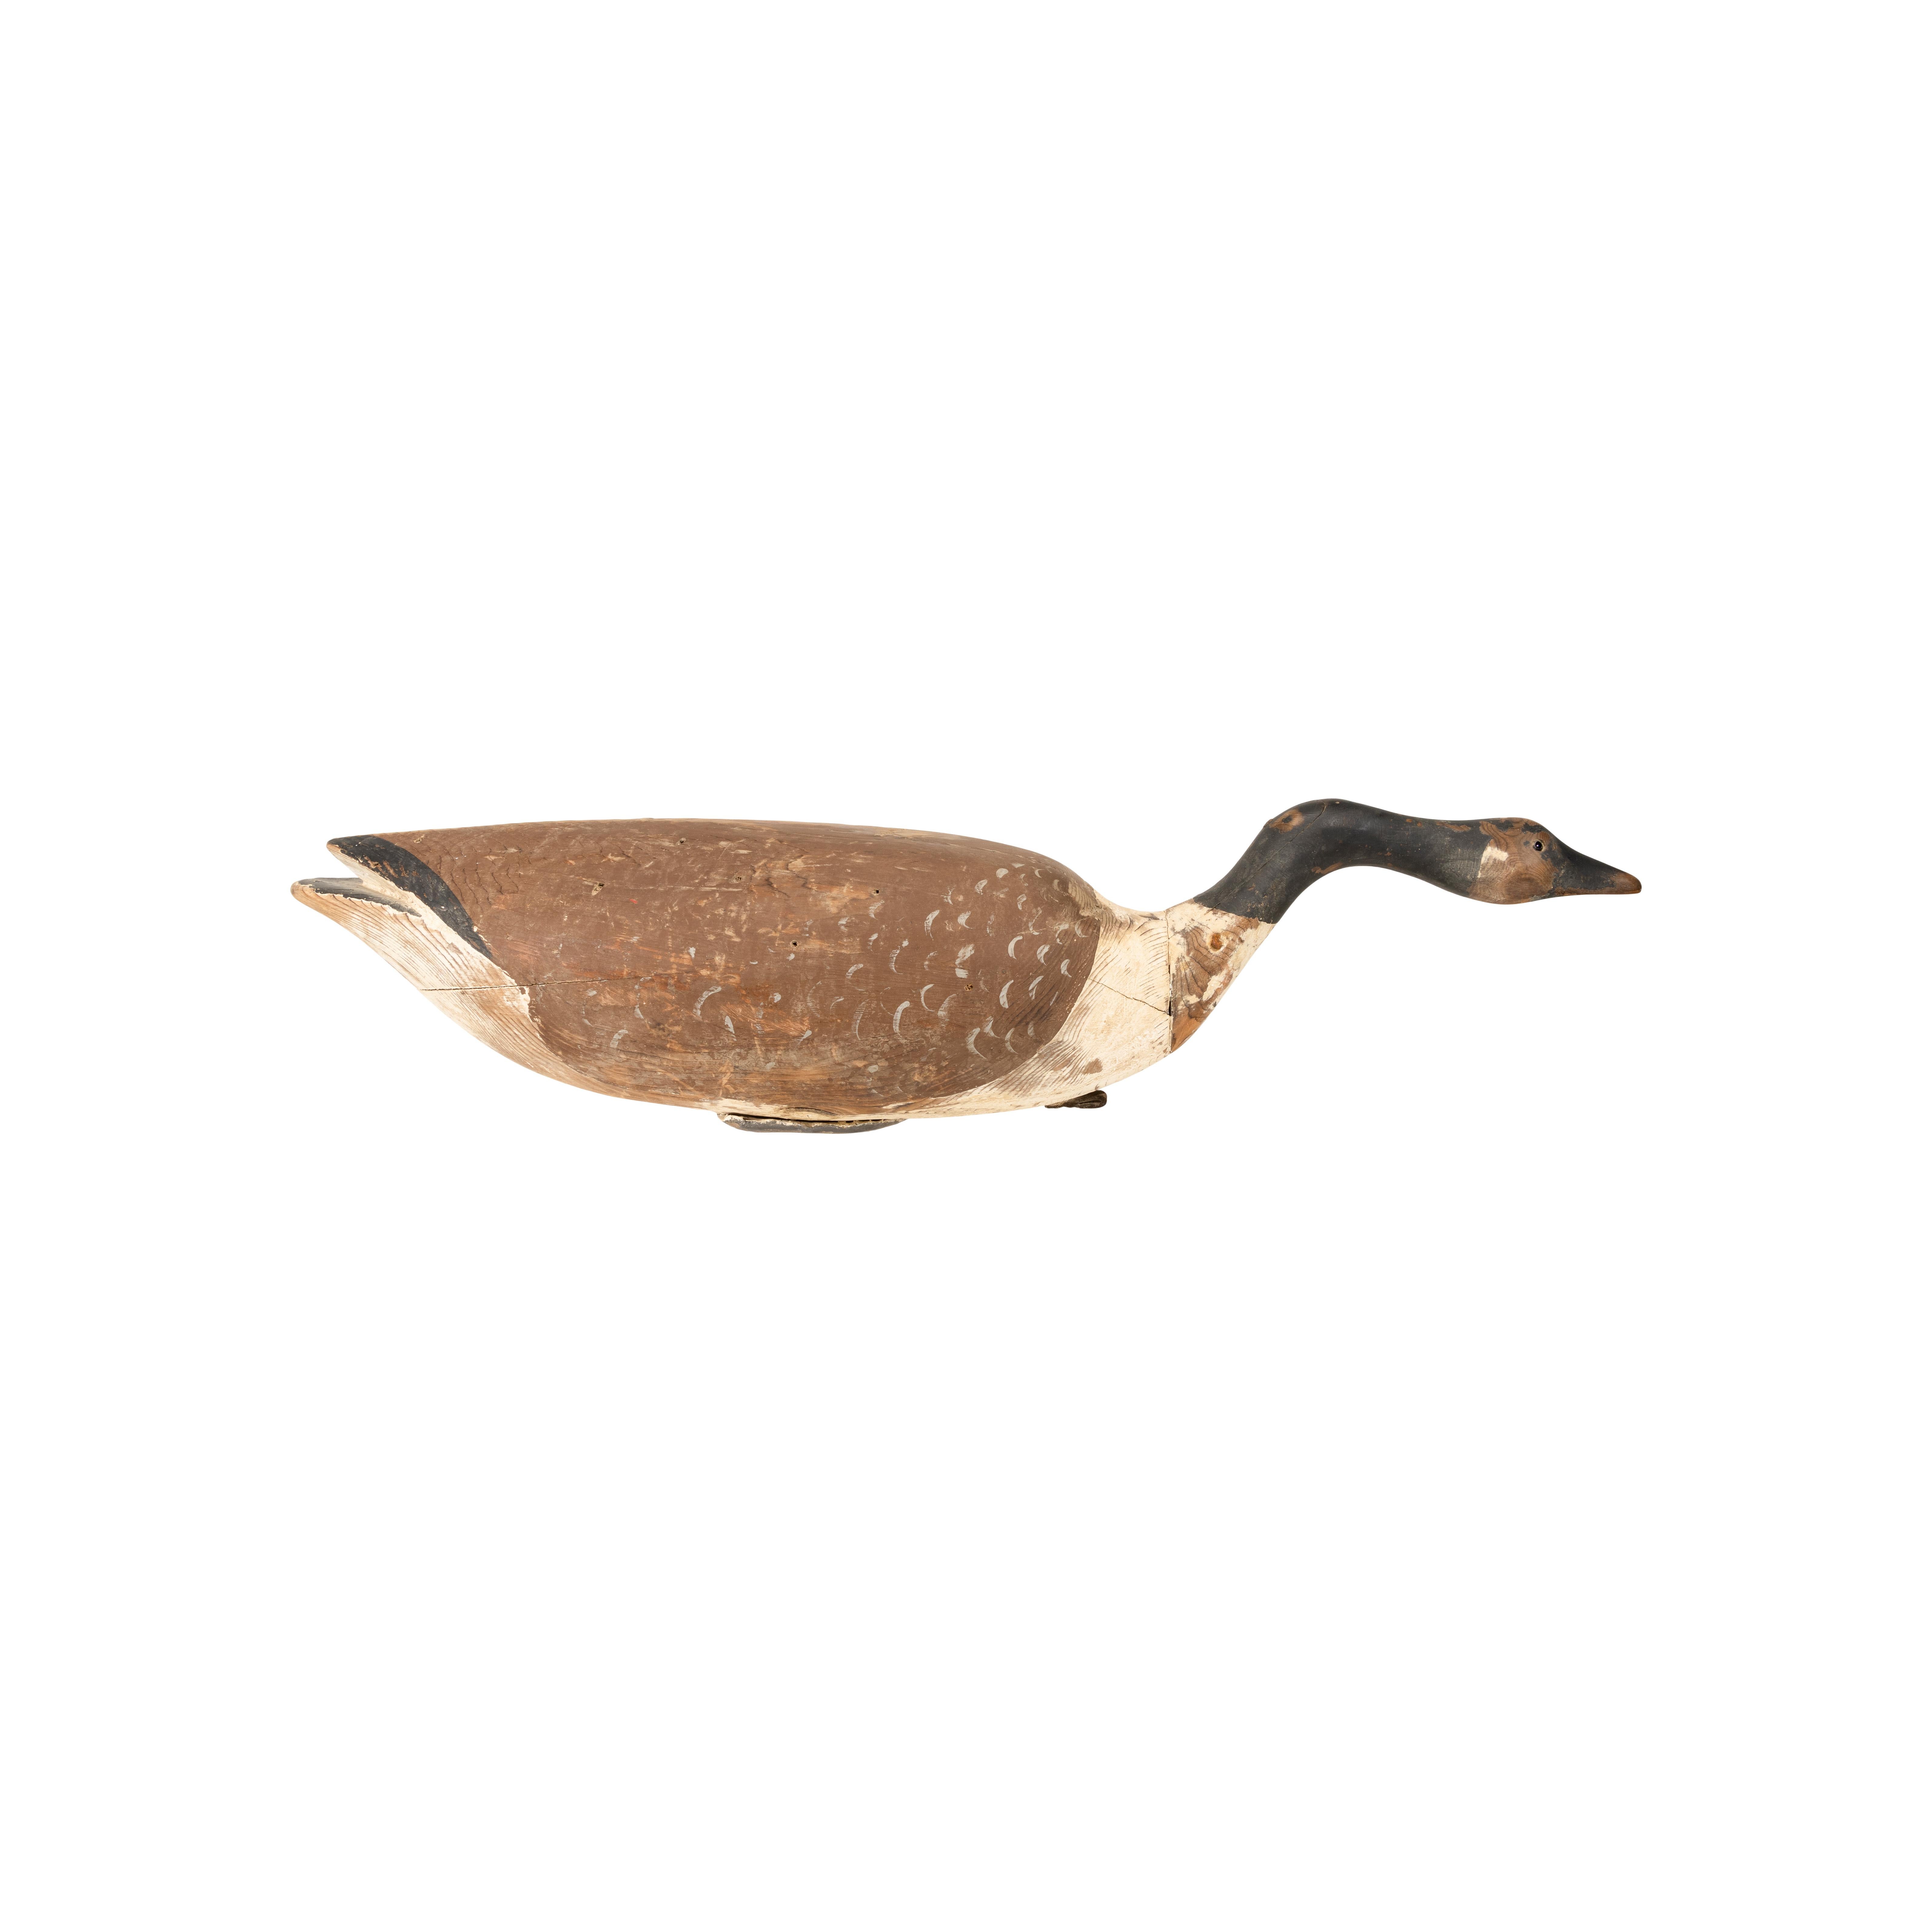 Nathan Cobb Jr Canada Goose Decoy For Sale 1